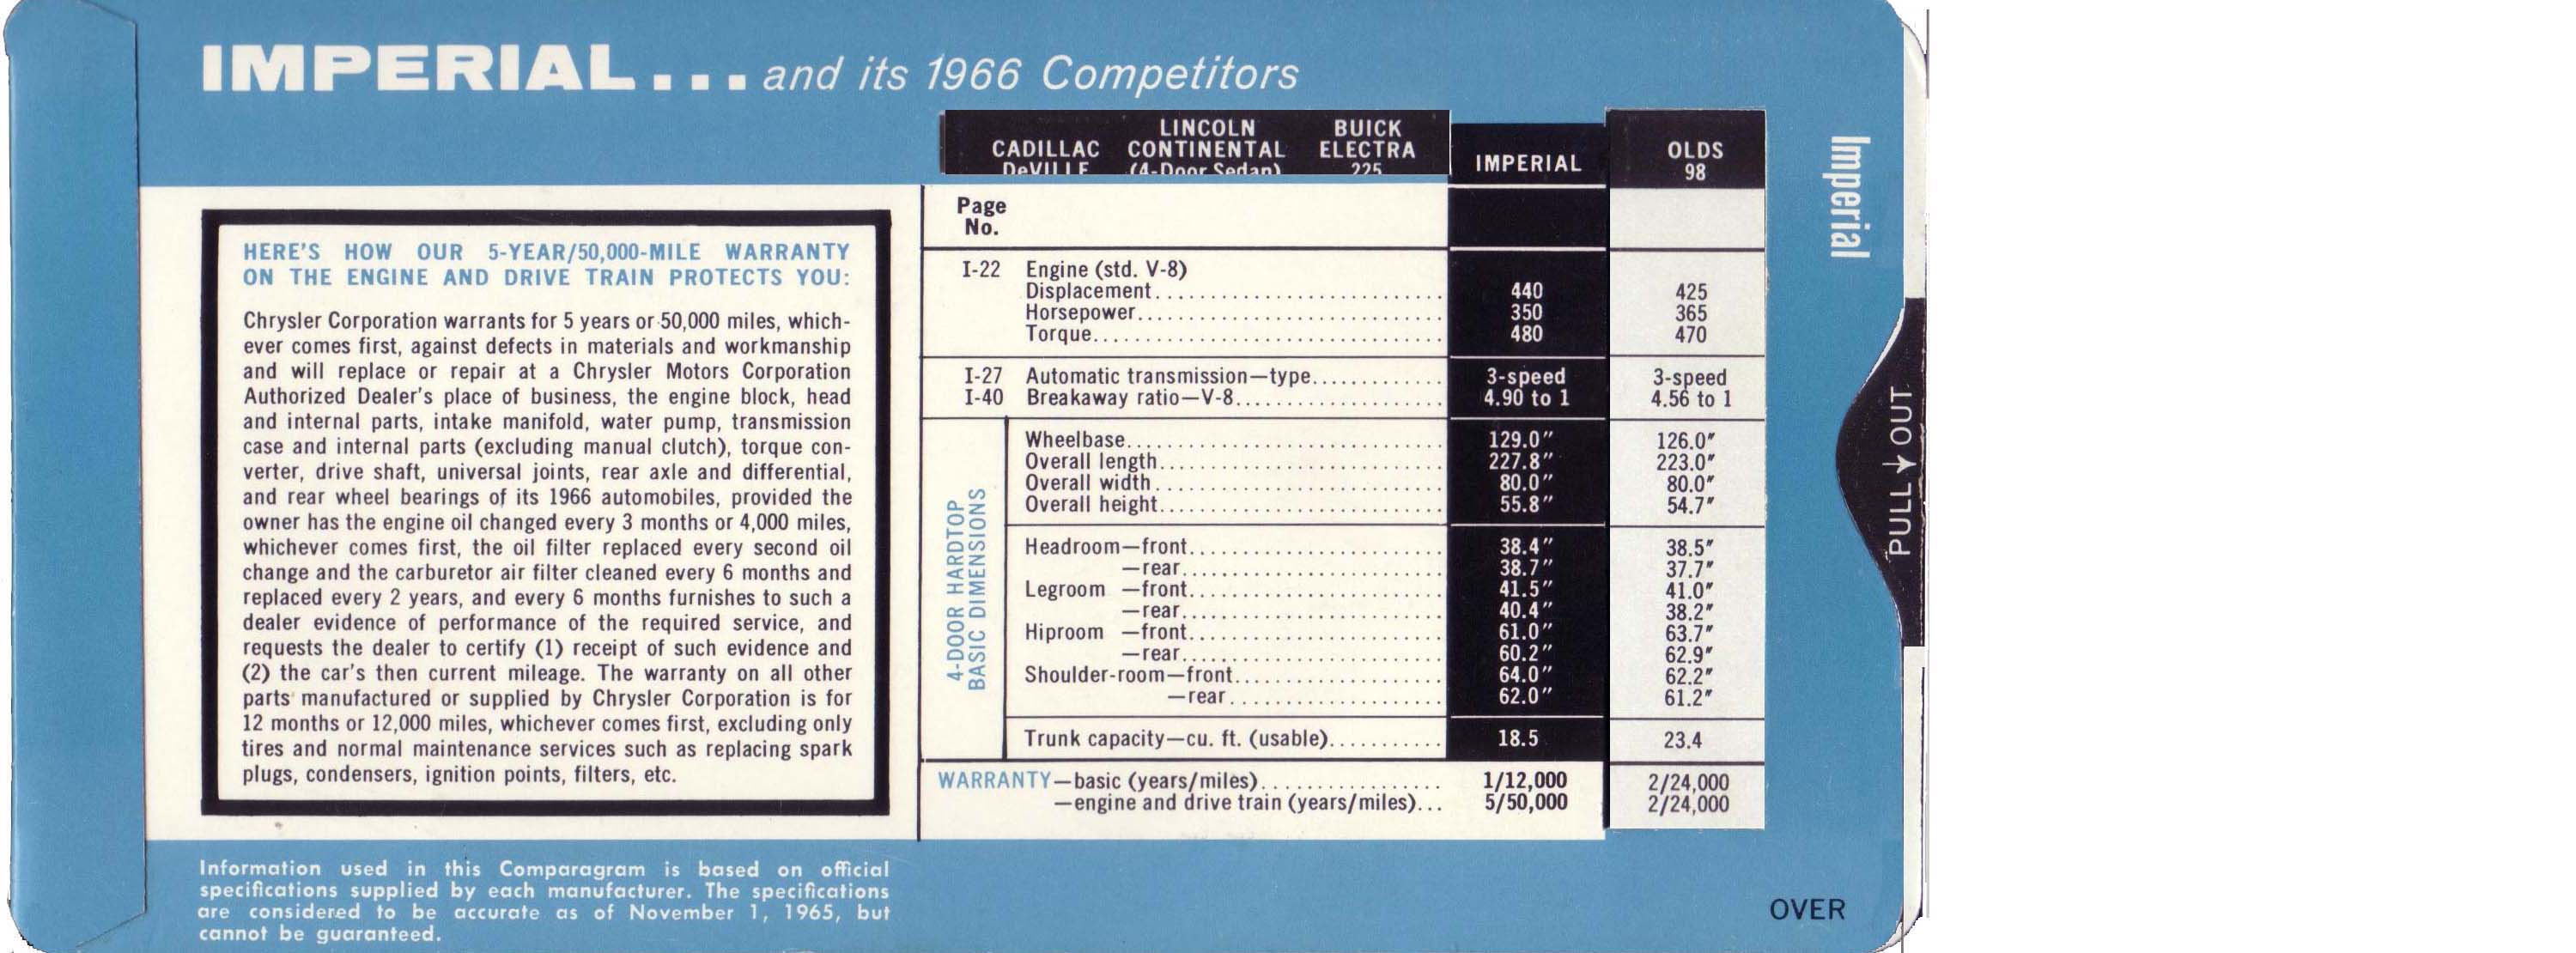 1966 Imperial Comparisons-01